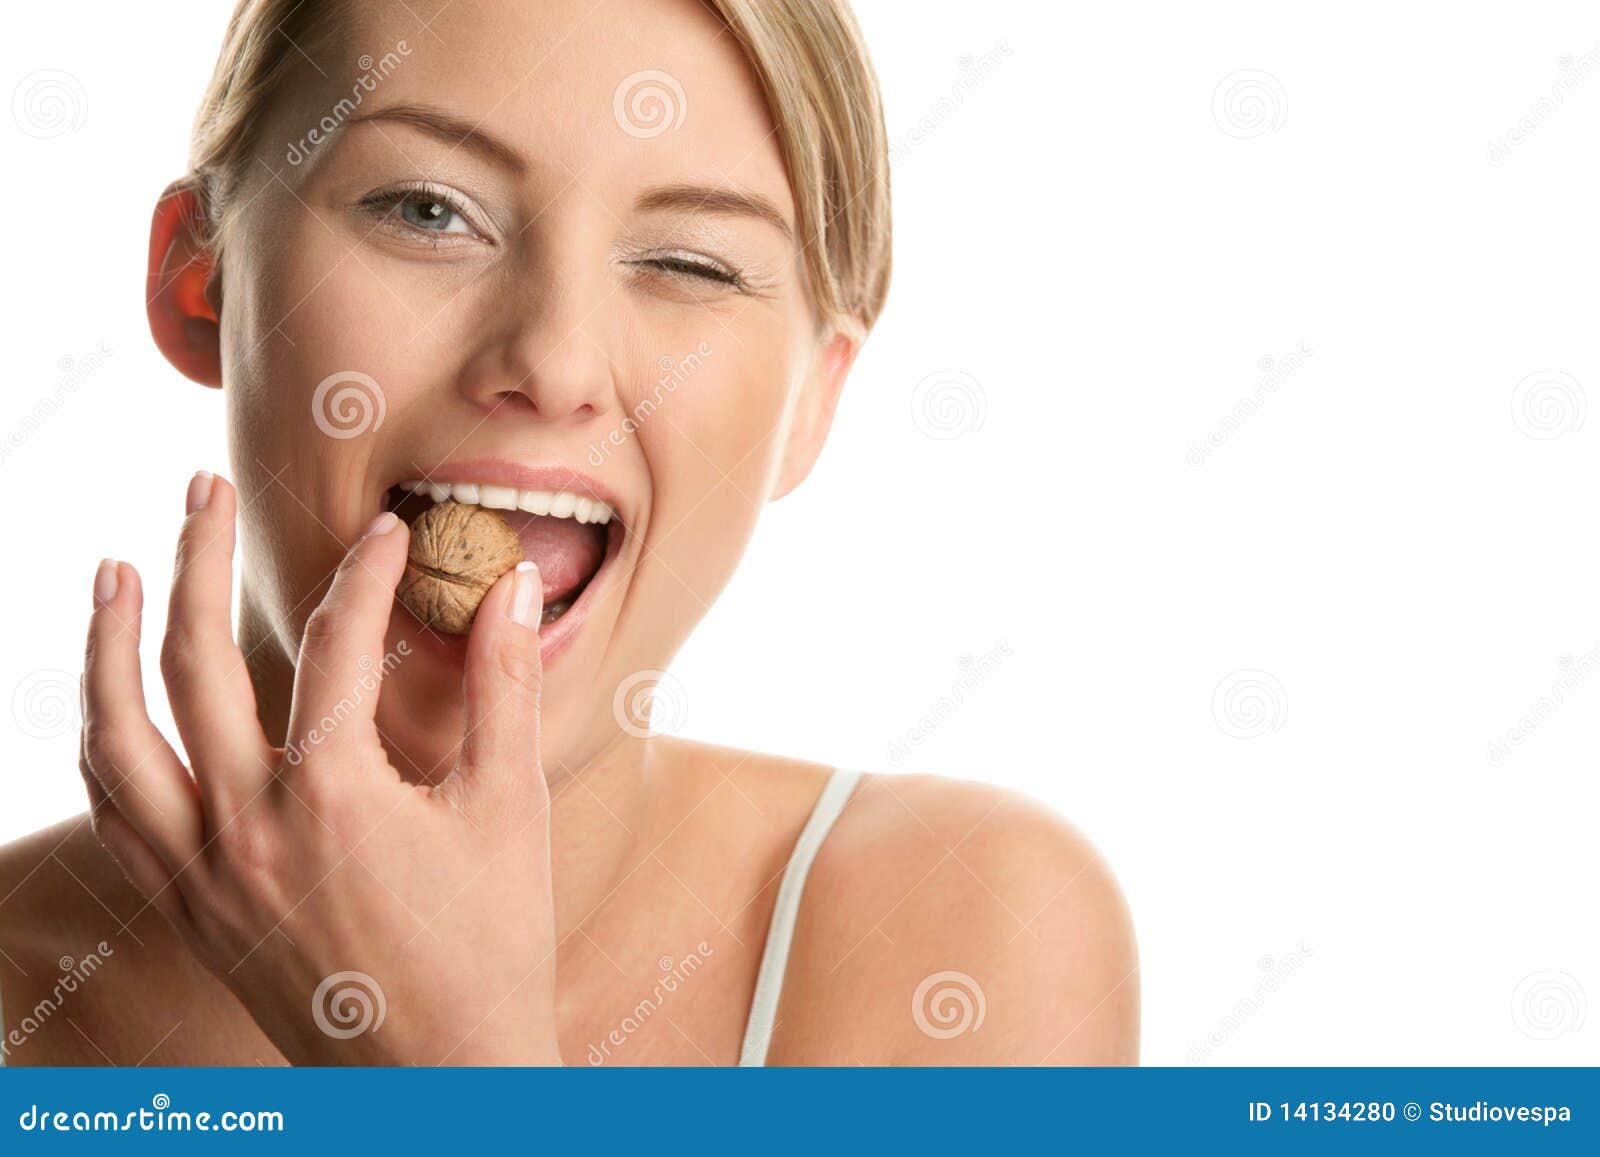 woman cracking walnut